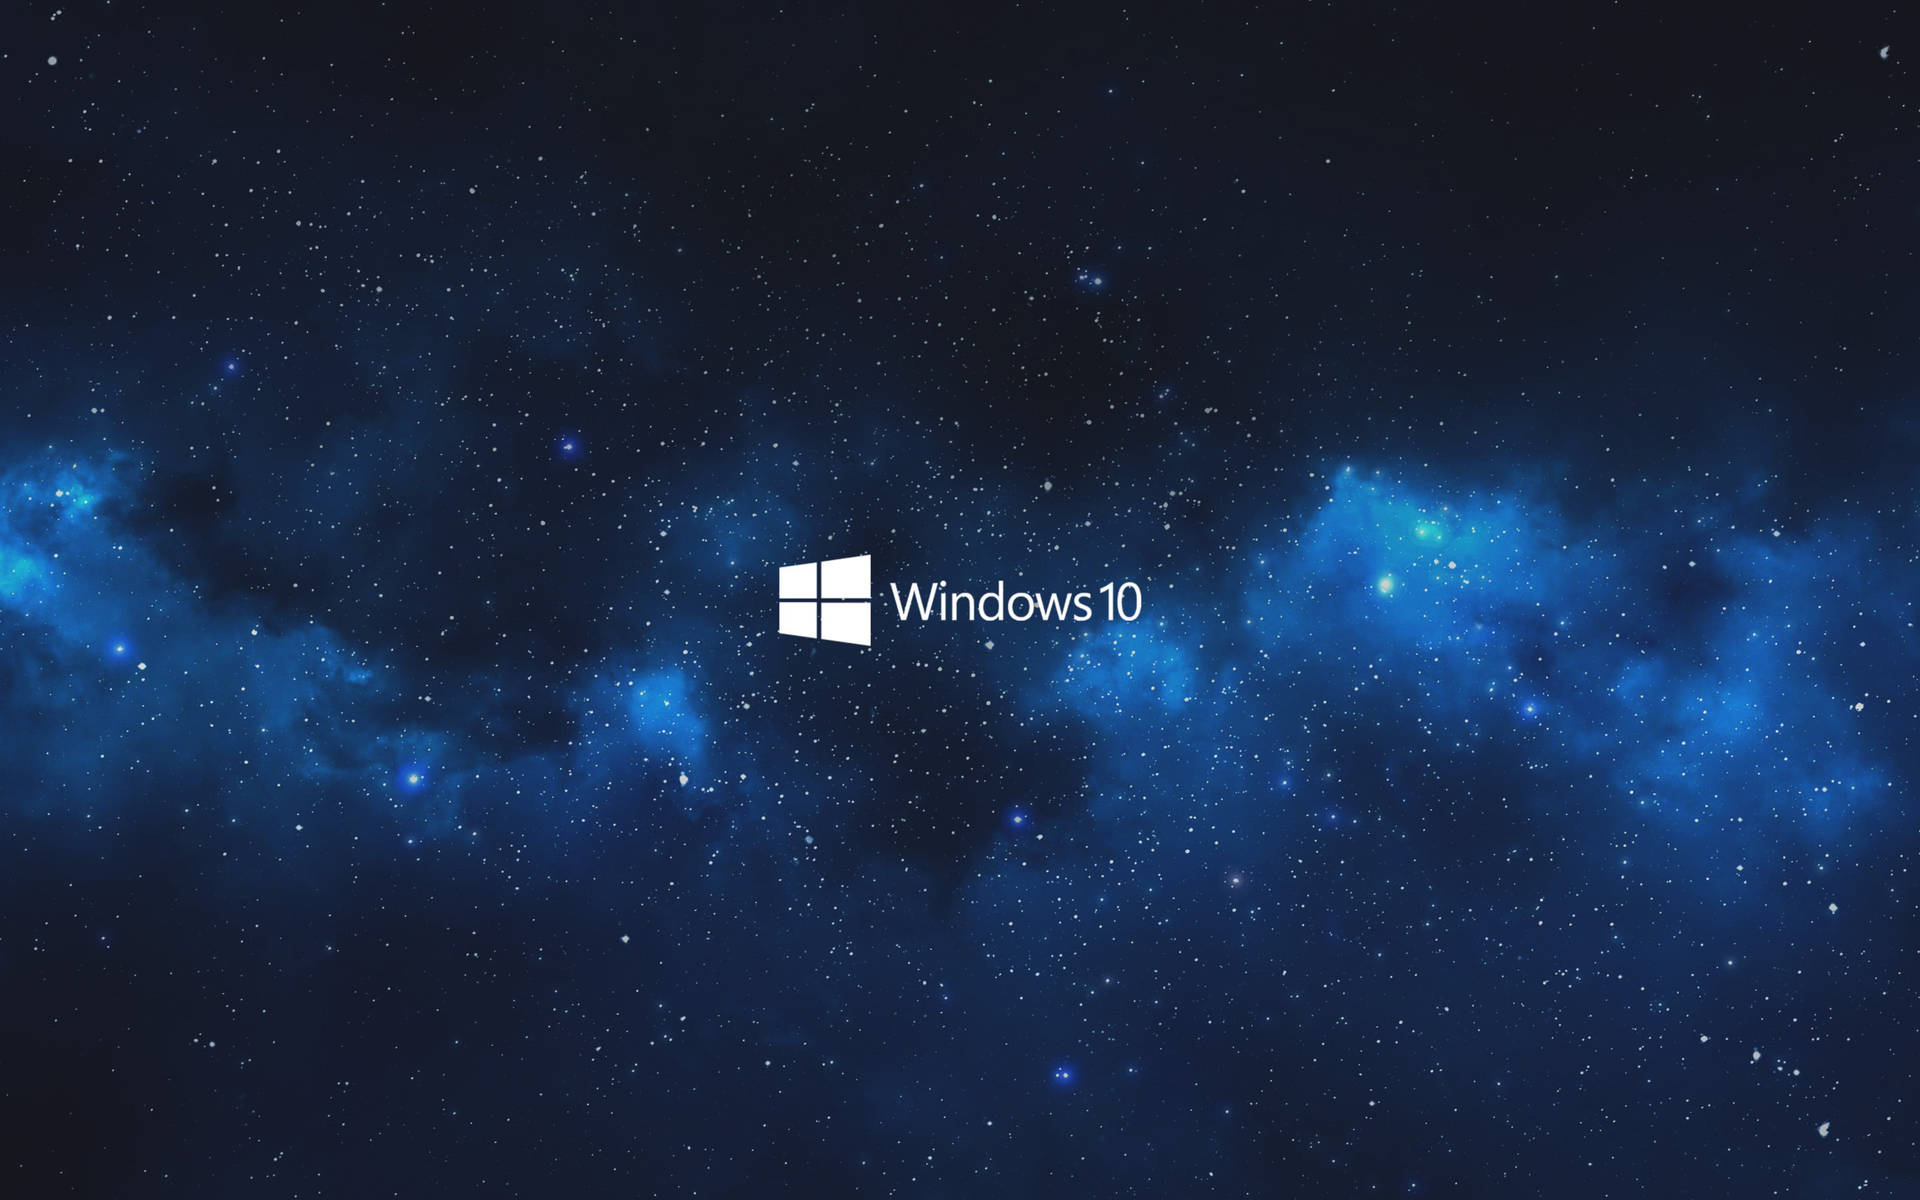 Windows 10 Blue Galaxy Wallpaper